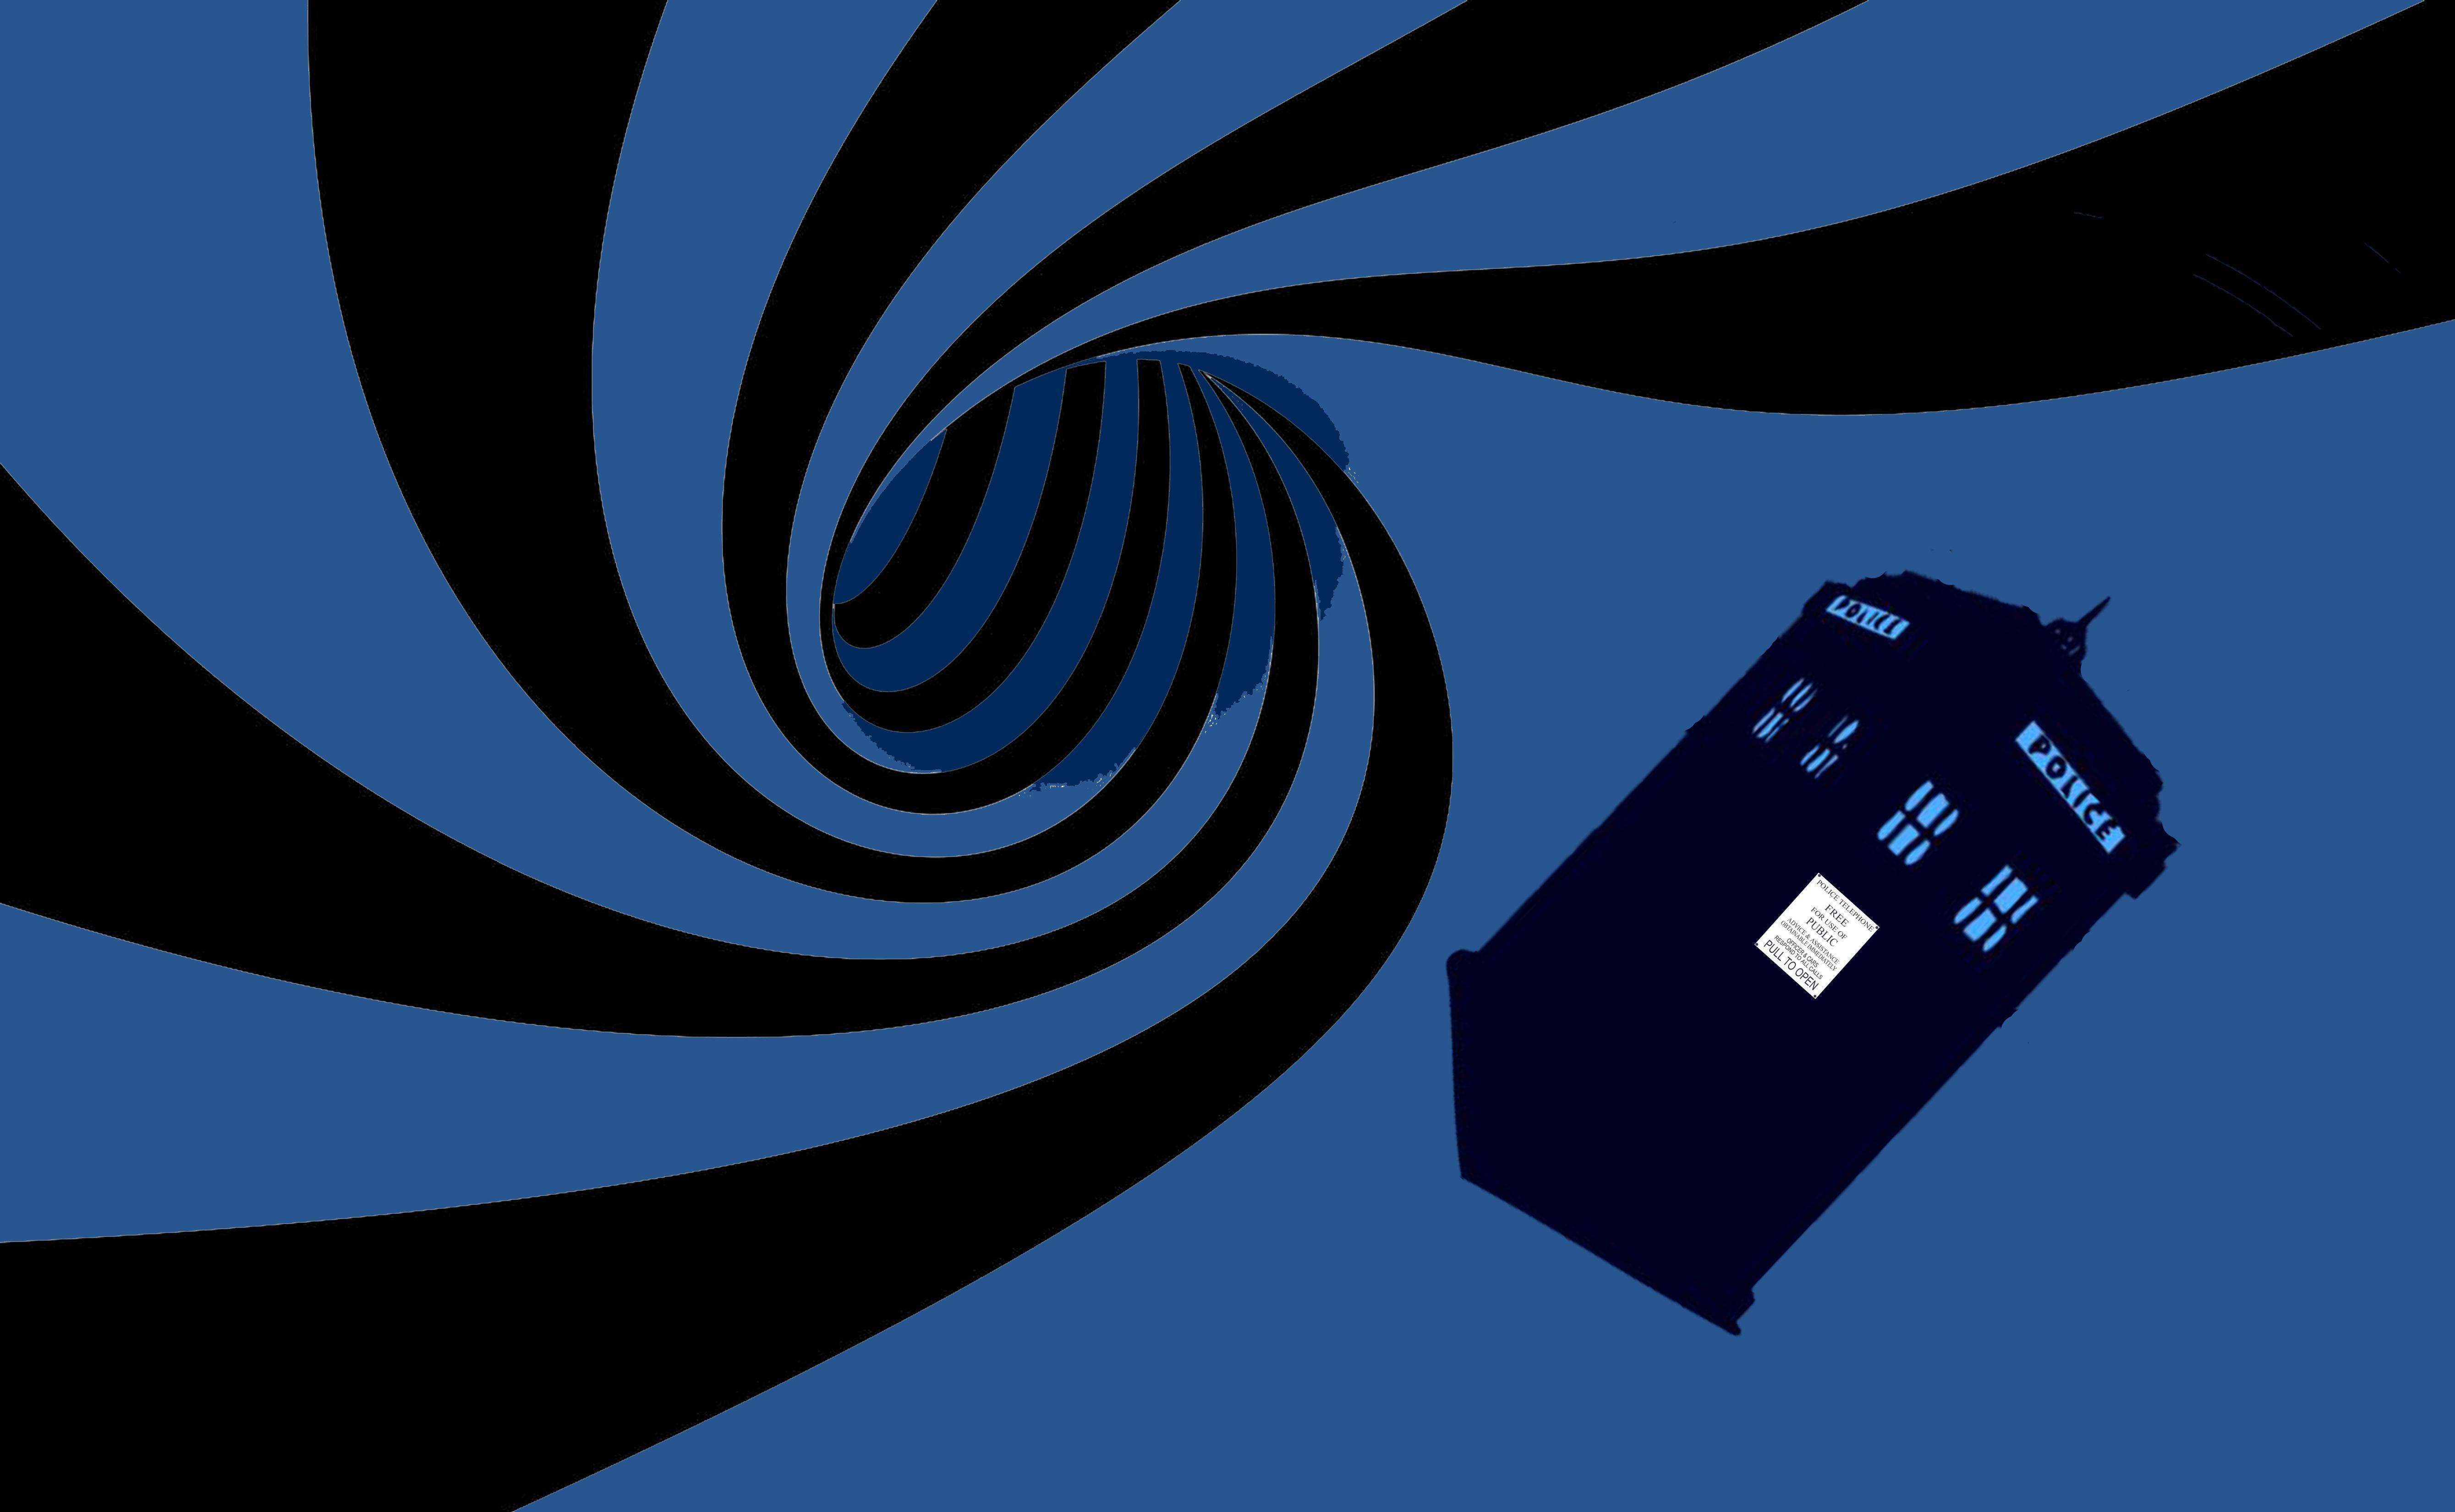 TARDIS wallpaper I made a while back